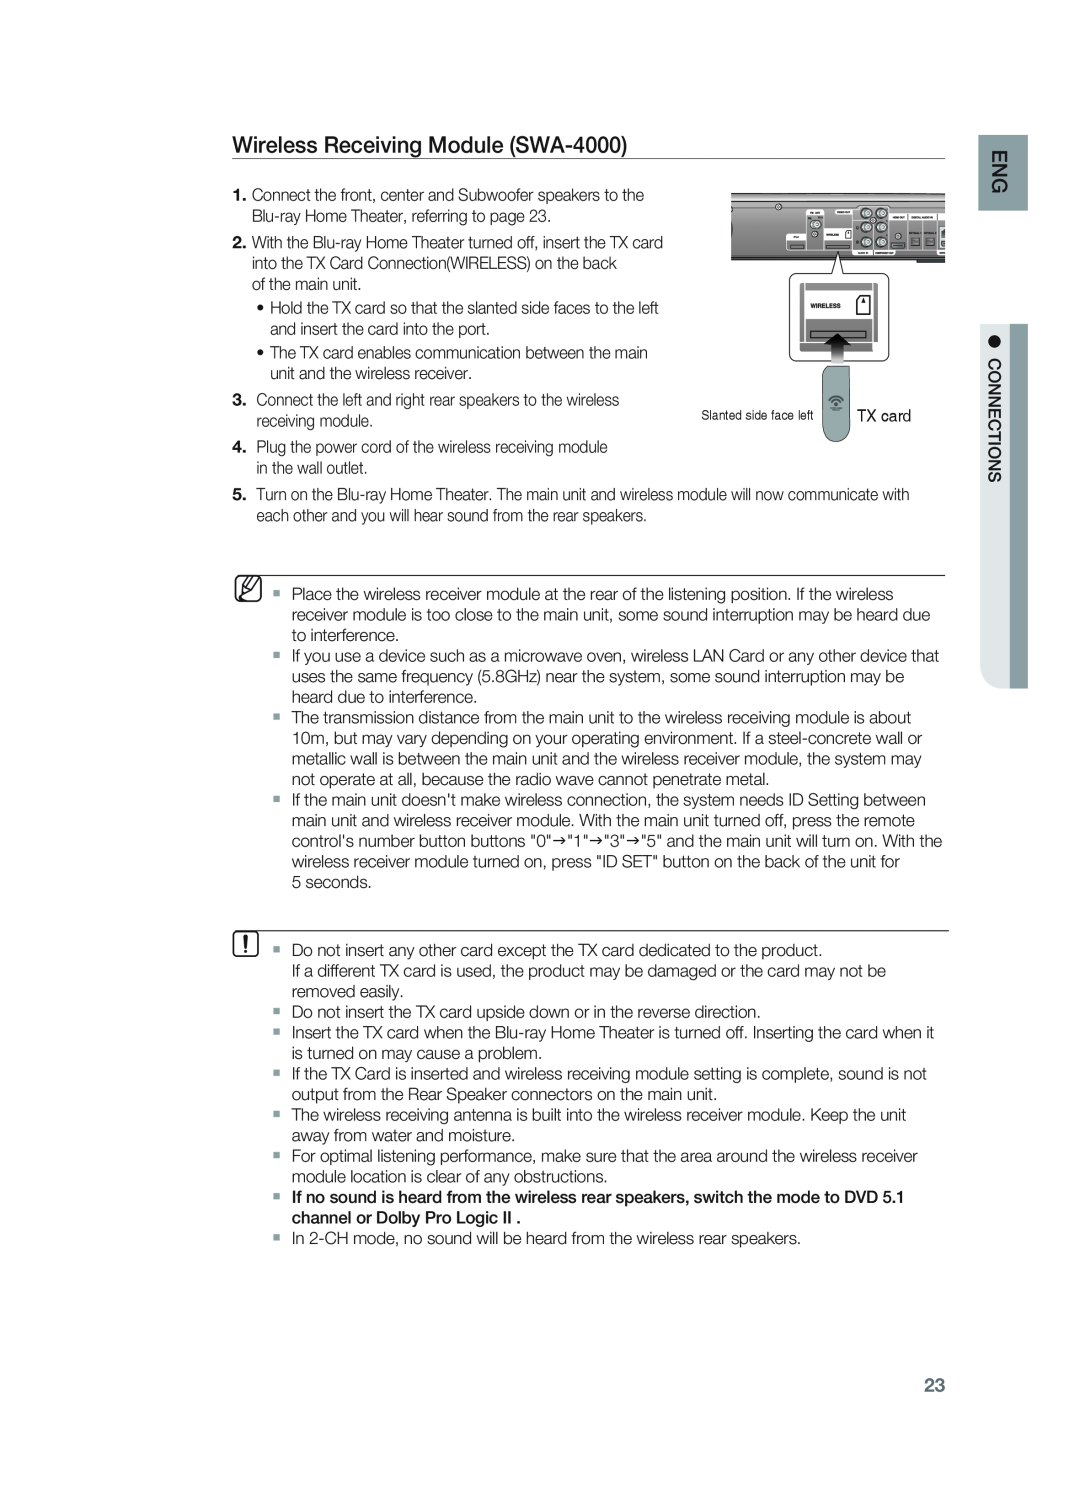 Samsung HT-BD1252, HT-BD1255 user manual Wireless Receiving Module SWA-4000 